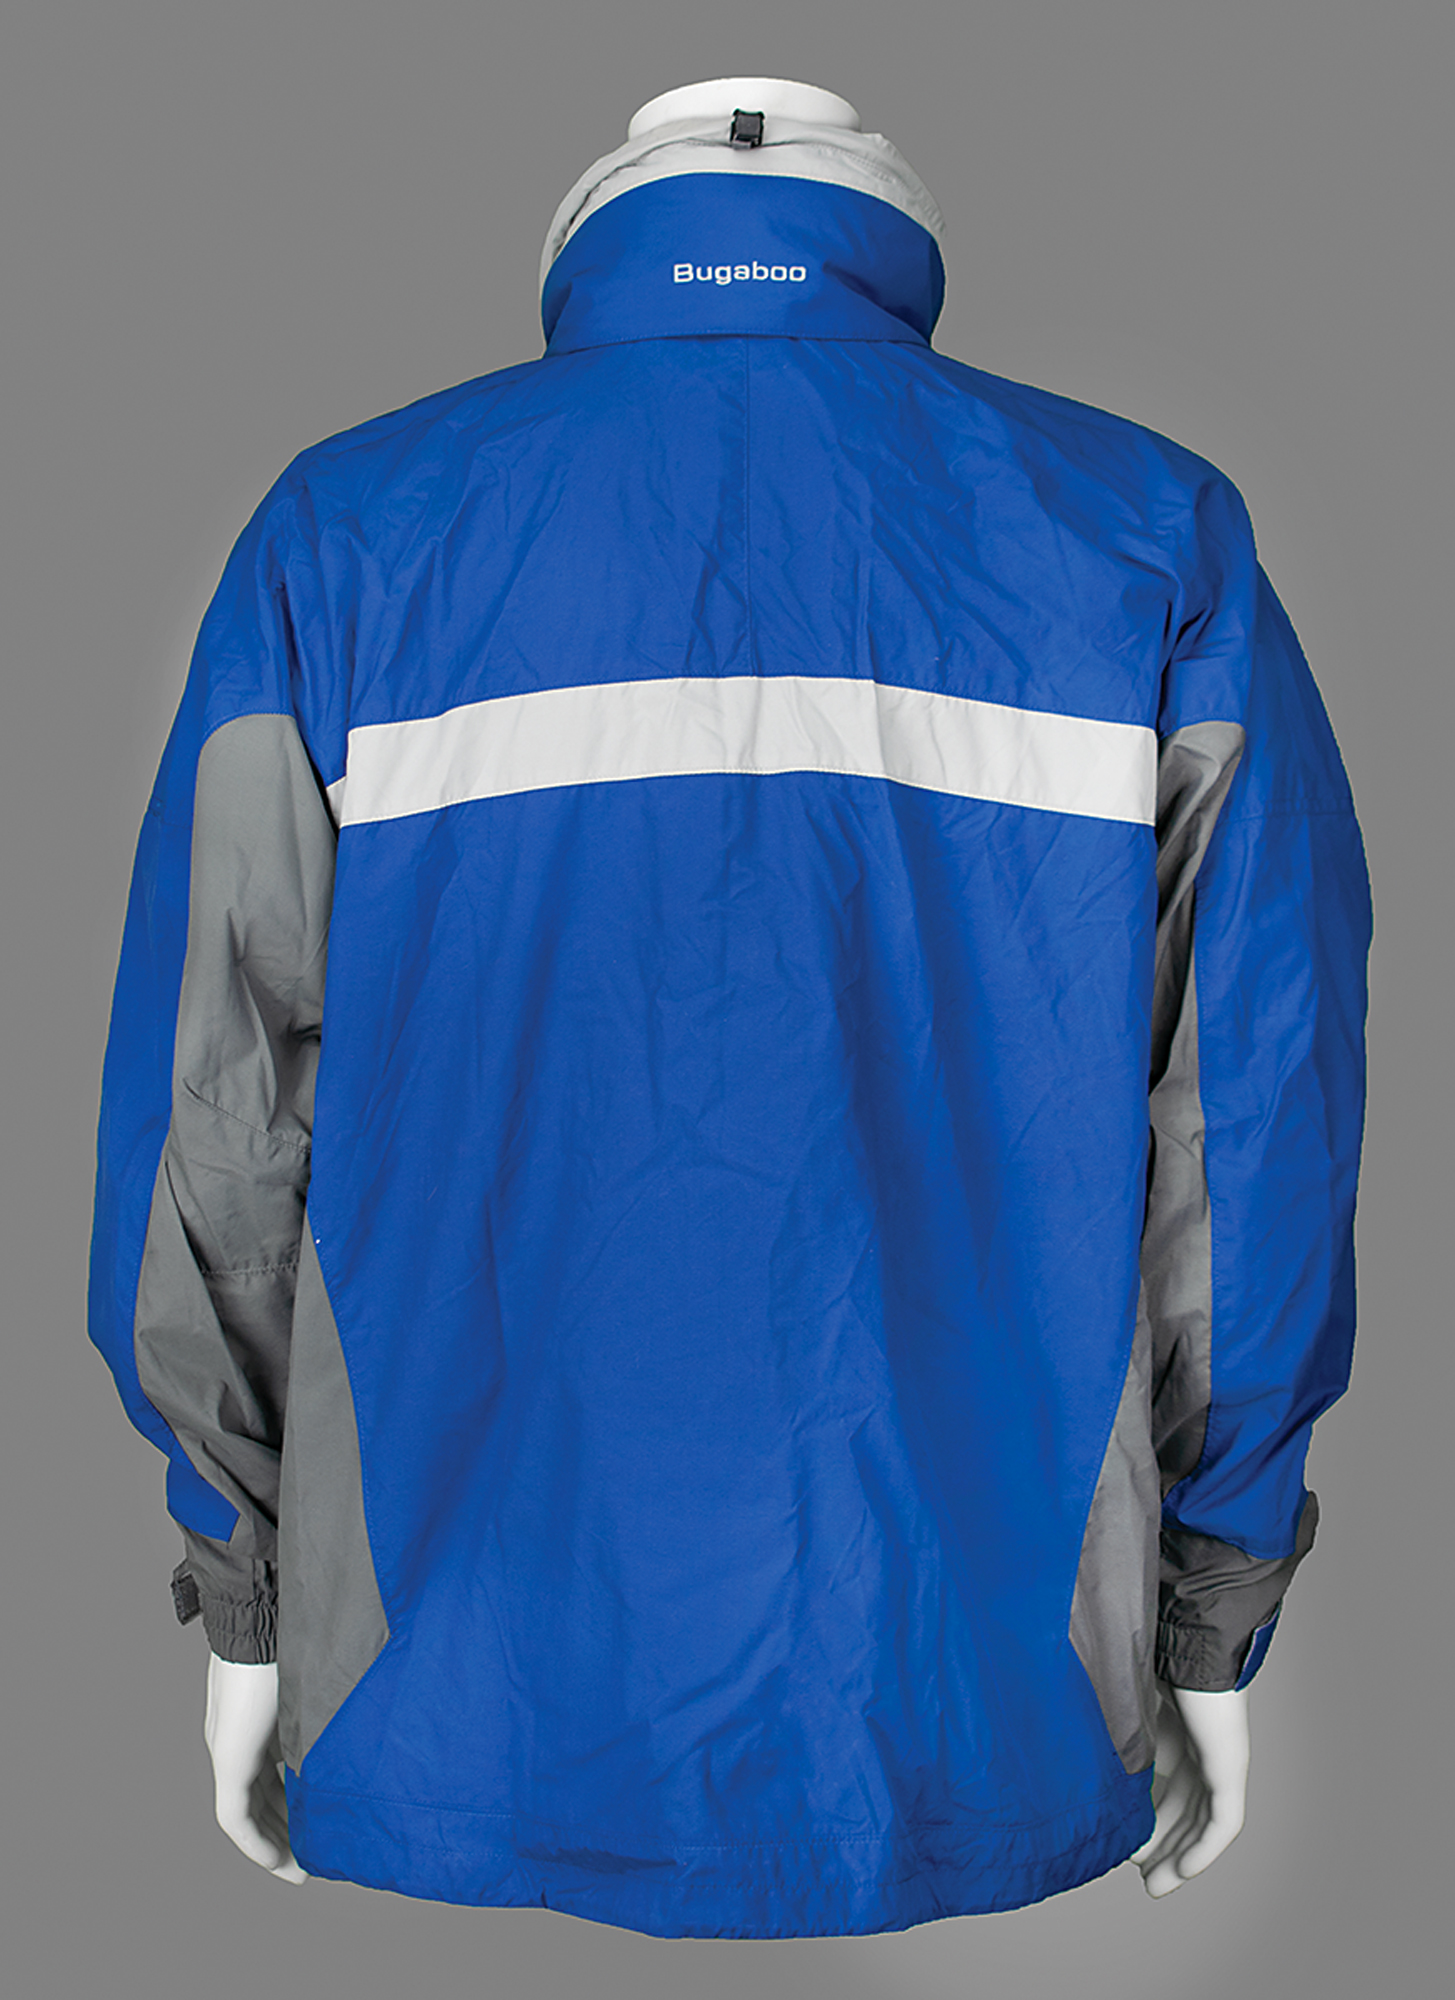 Dan Jansen's Olympic NBC Commentator Jacket | Sold for $0 | RR Auction